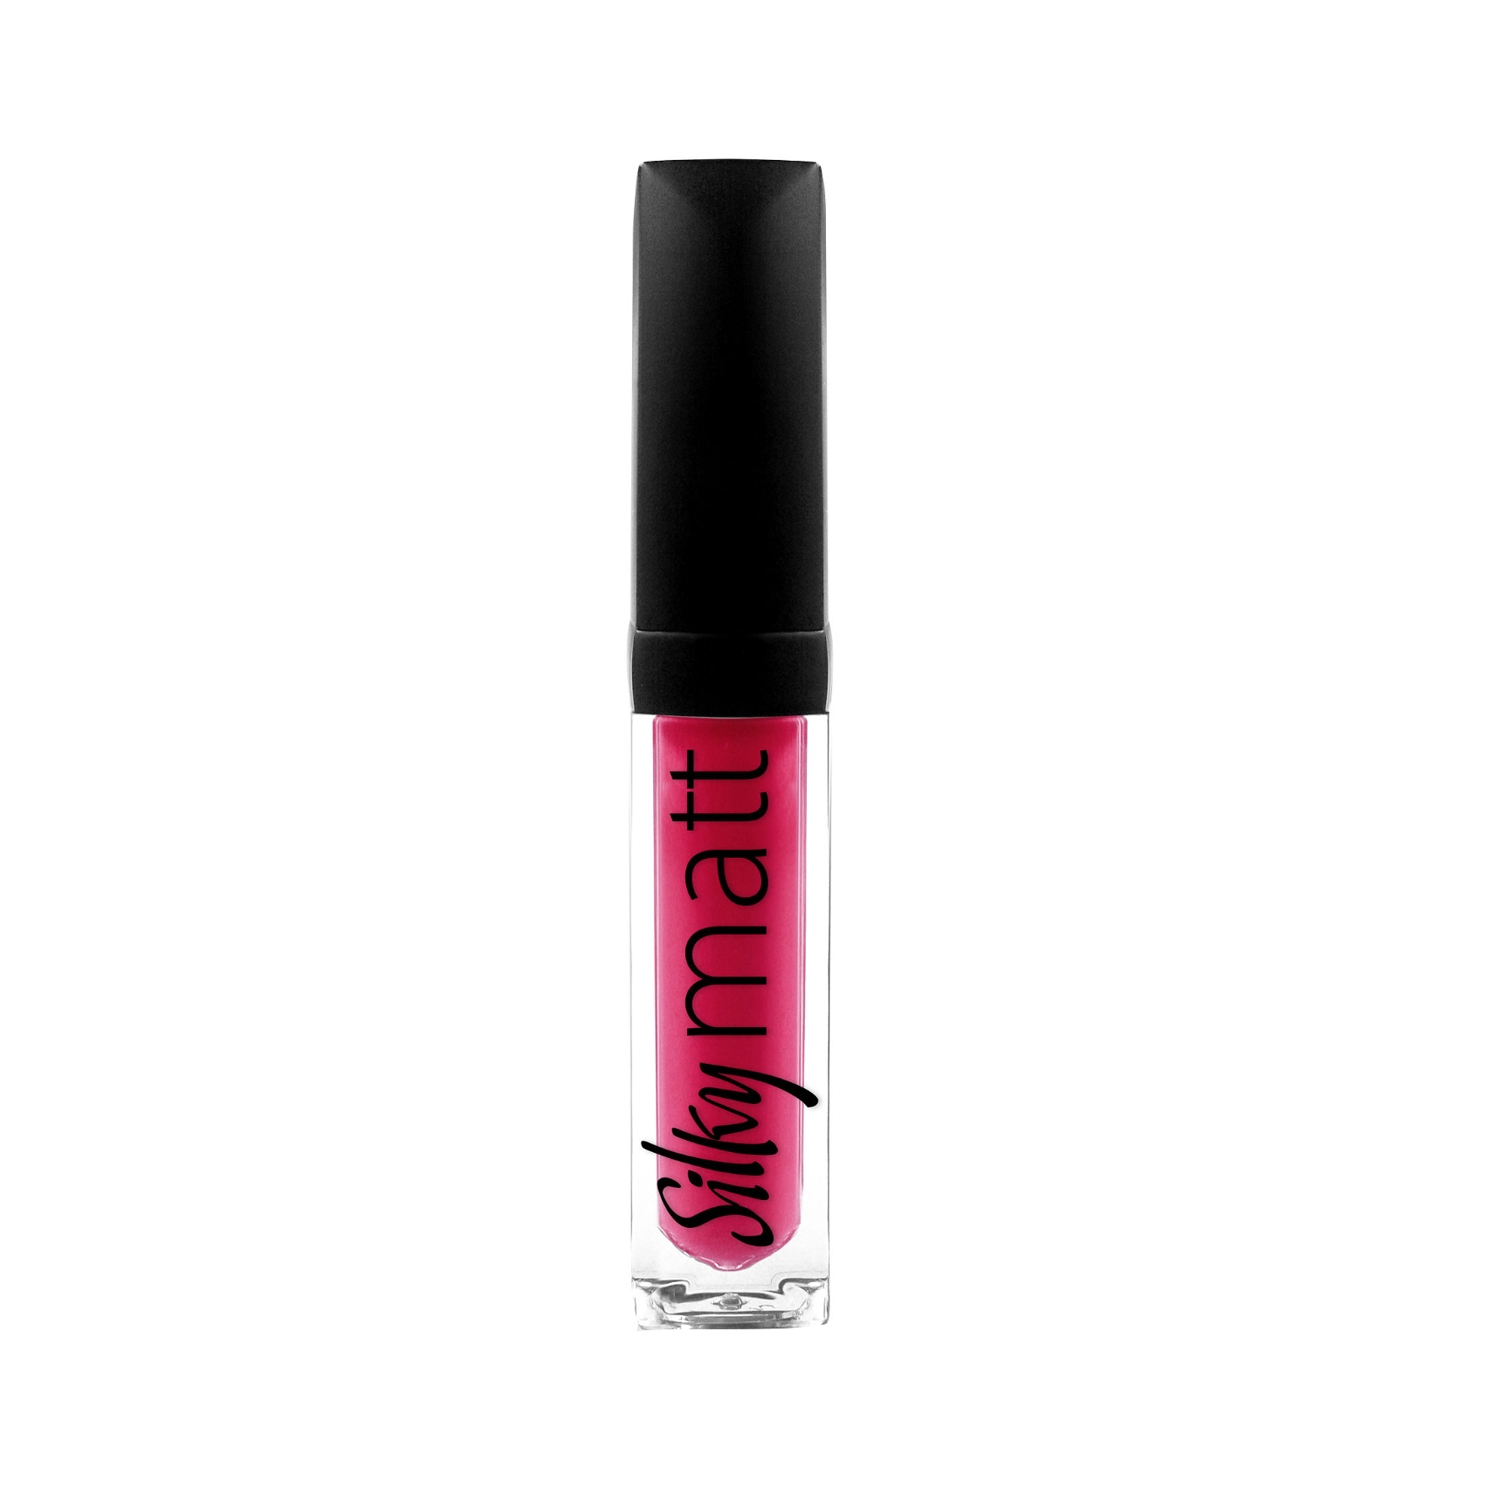 Paese Cosmetics | Paese Cosmetics Silky Matt Liquid Lipstick - 703 Pink (6ml)